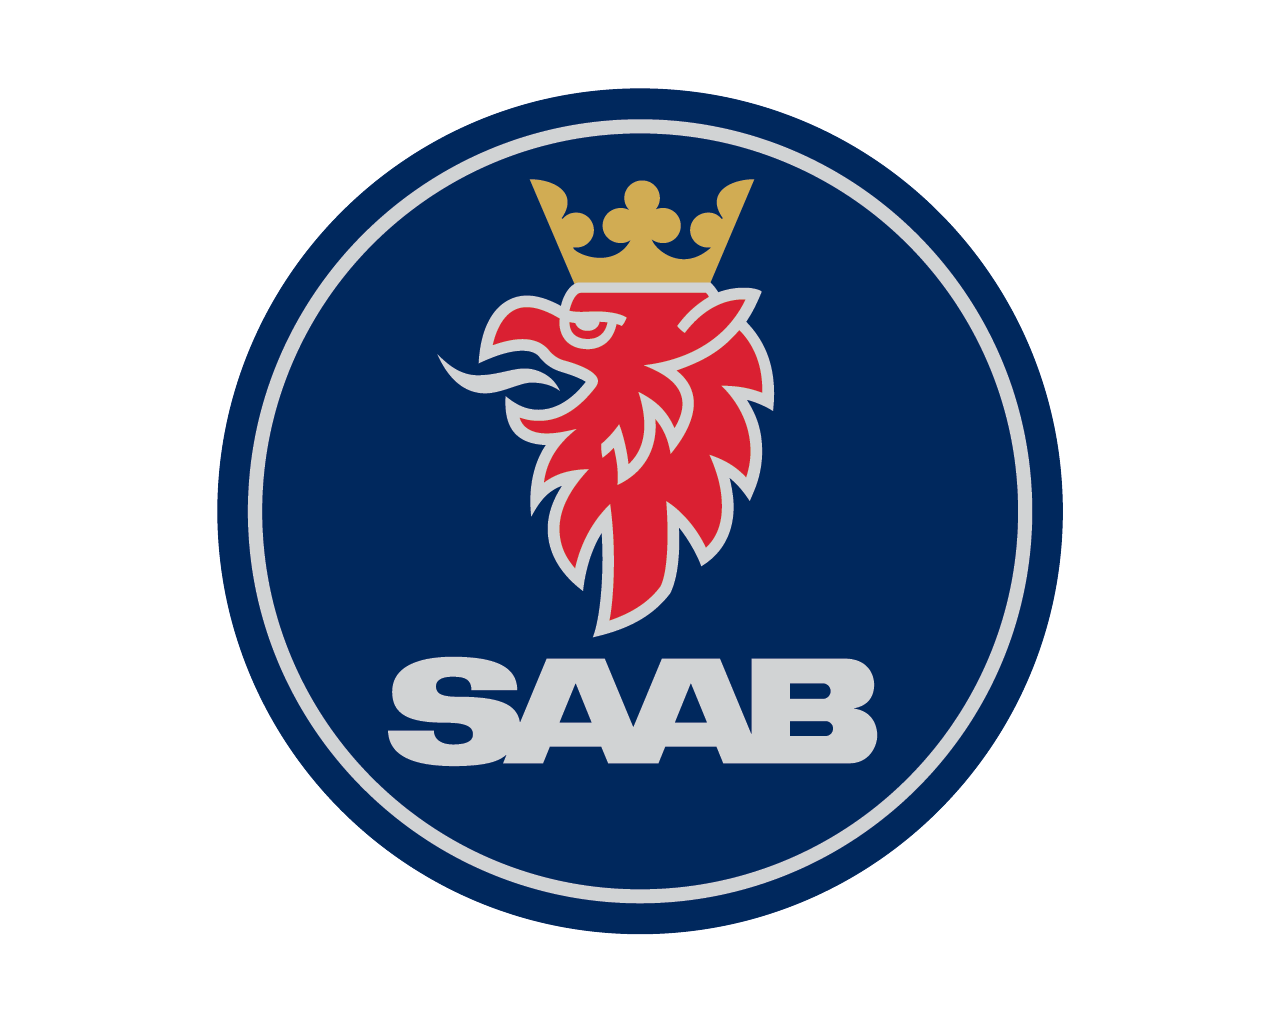 Saab-logo-2000-1280x1024.png